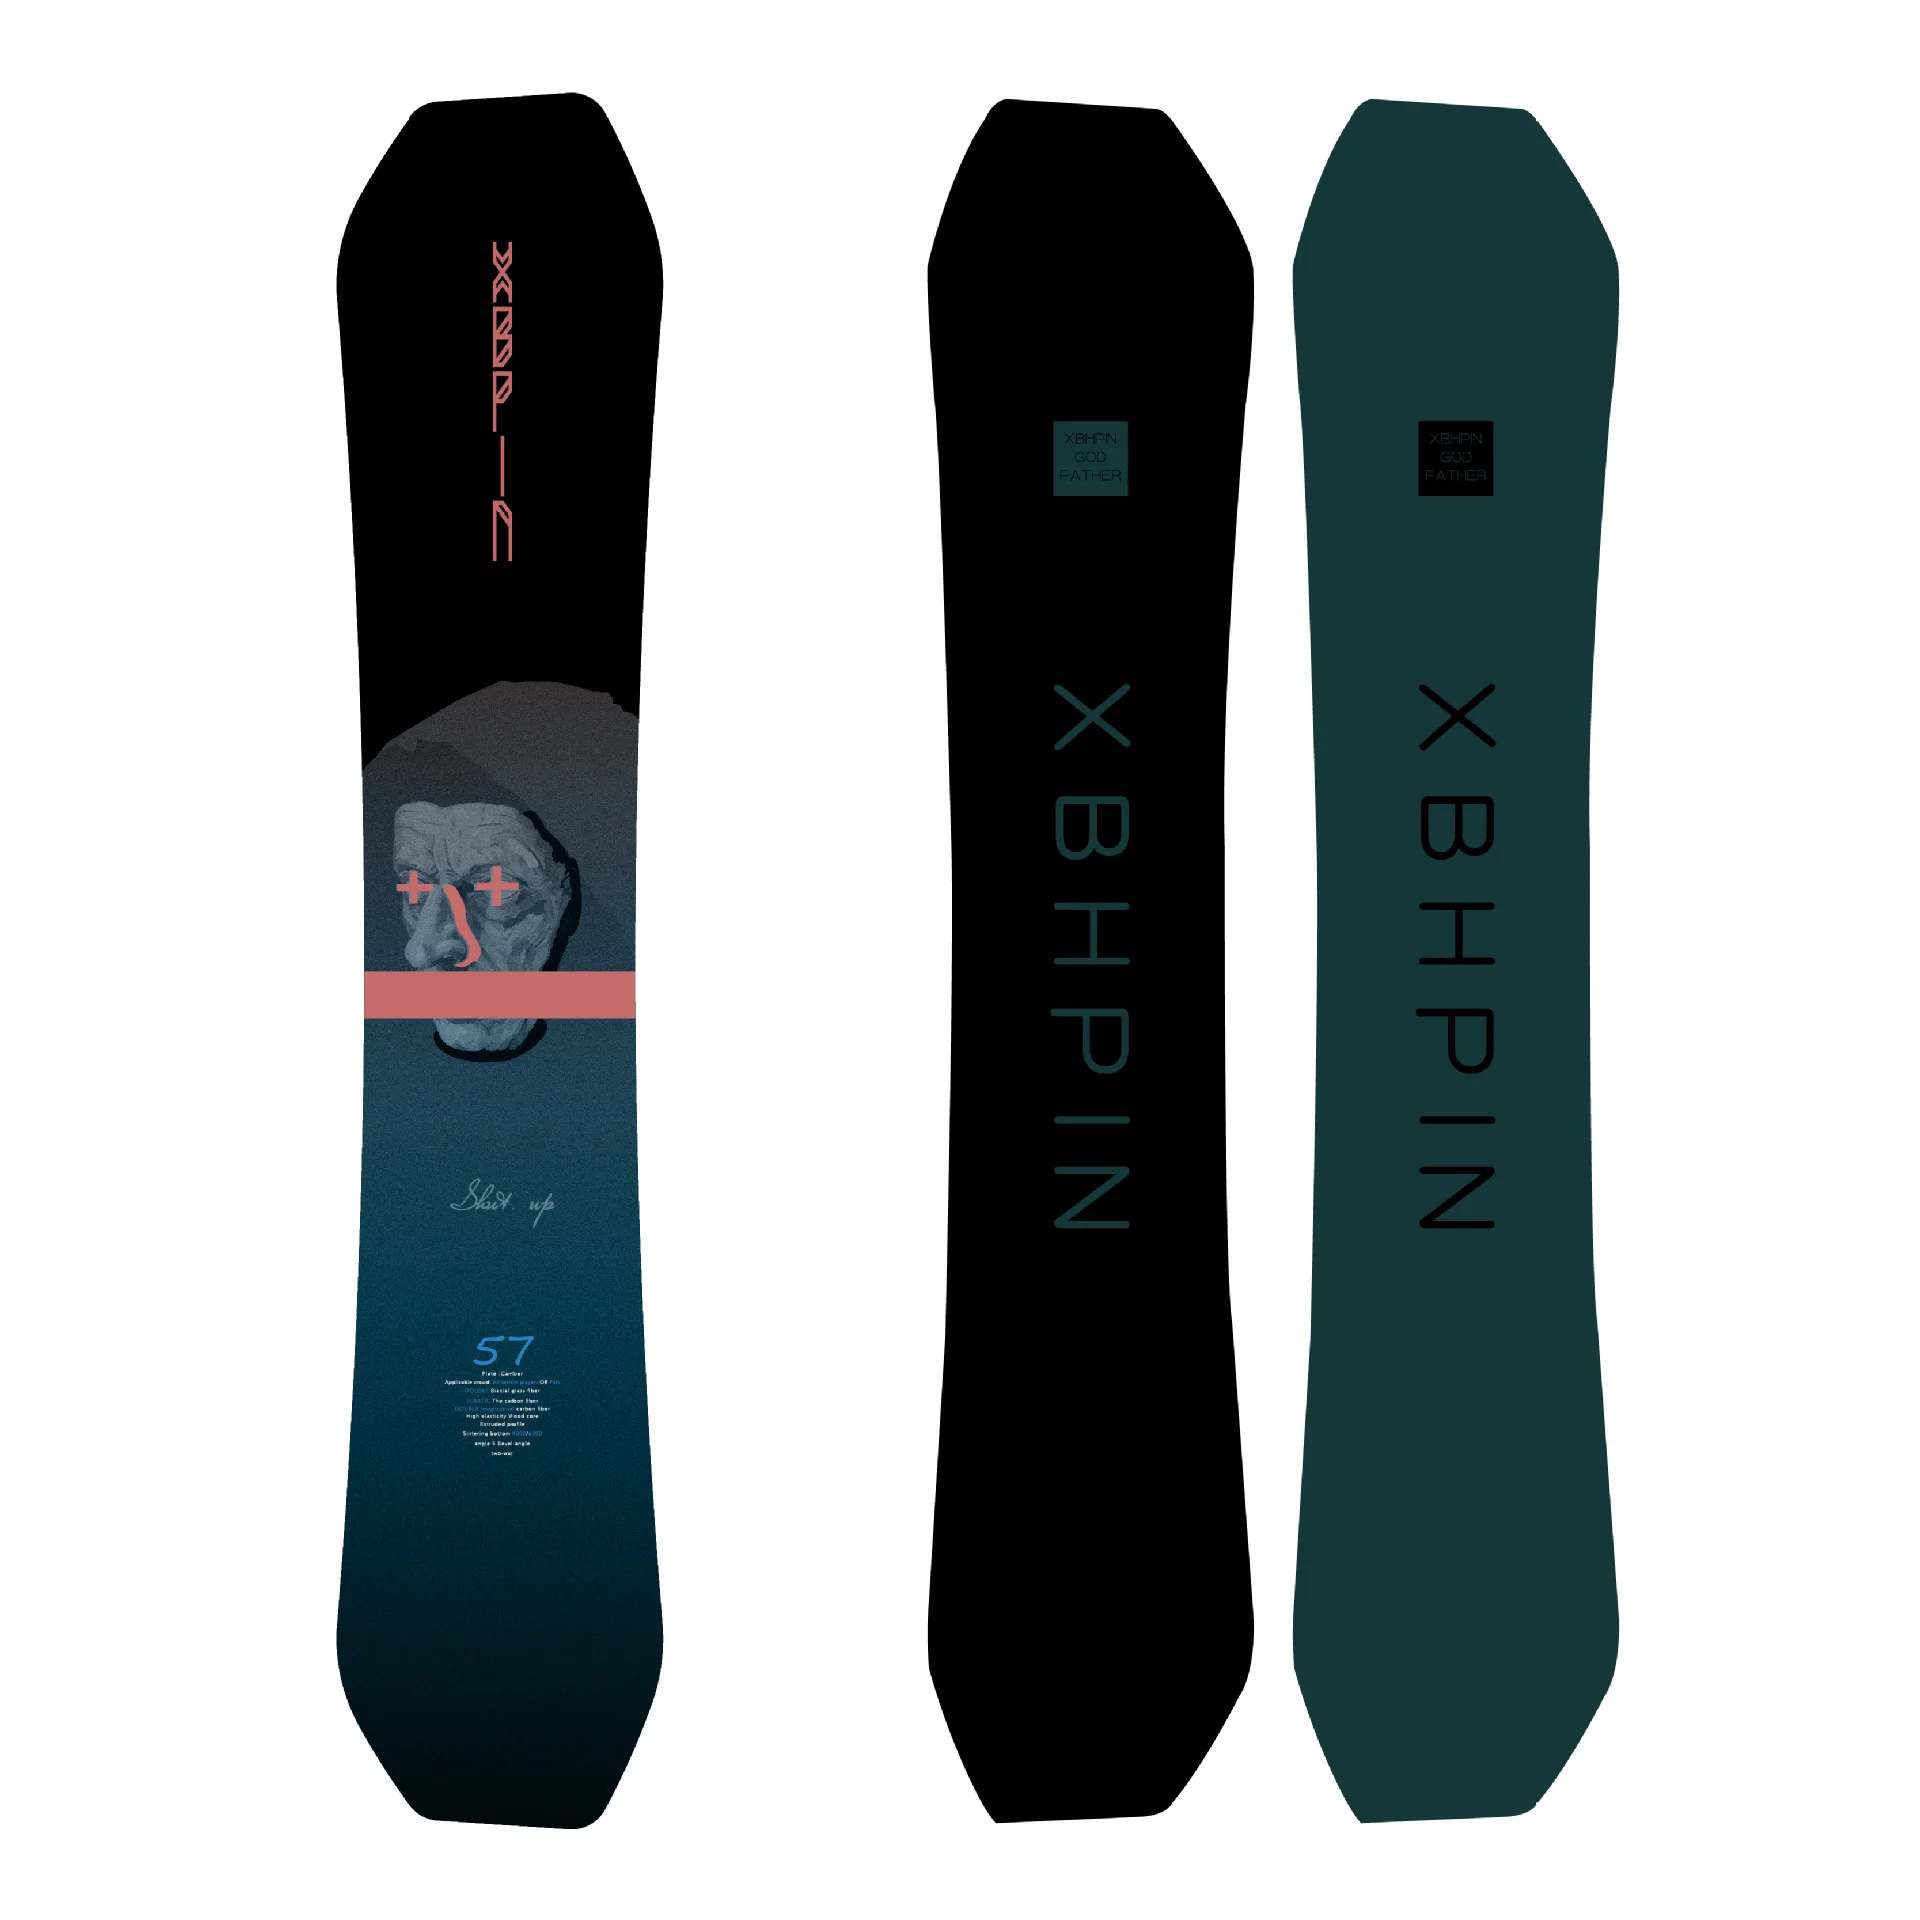 meer kennis vlam New Style Lightweight Skiing 160cm Adult Custom Snowboard - Buy Snowboard,New  Style Custom Snowboard,Lightweight Skiing 160cm Adult Snowboard Product on  Alibaba.com